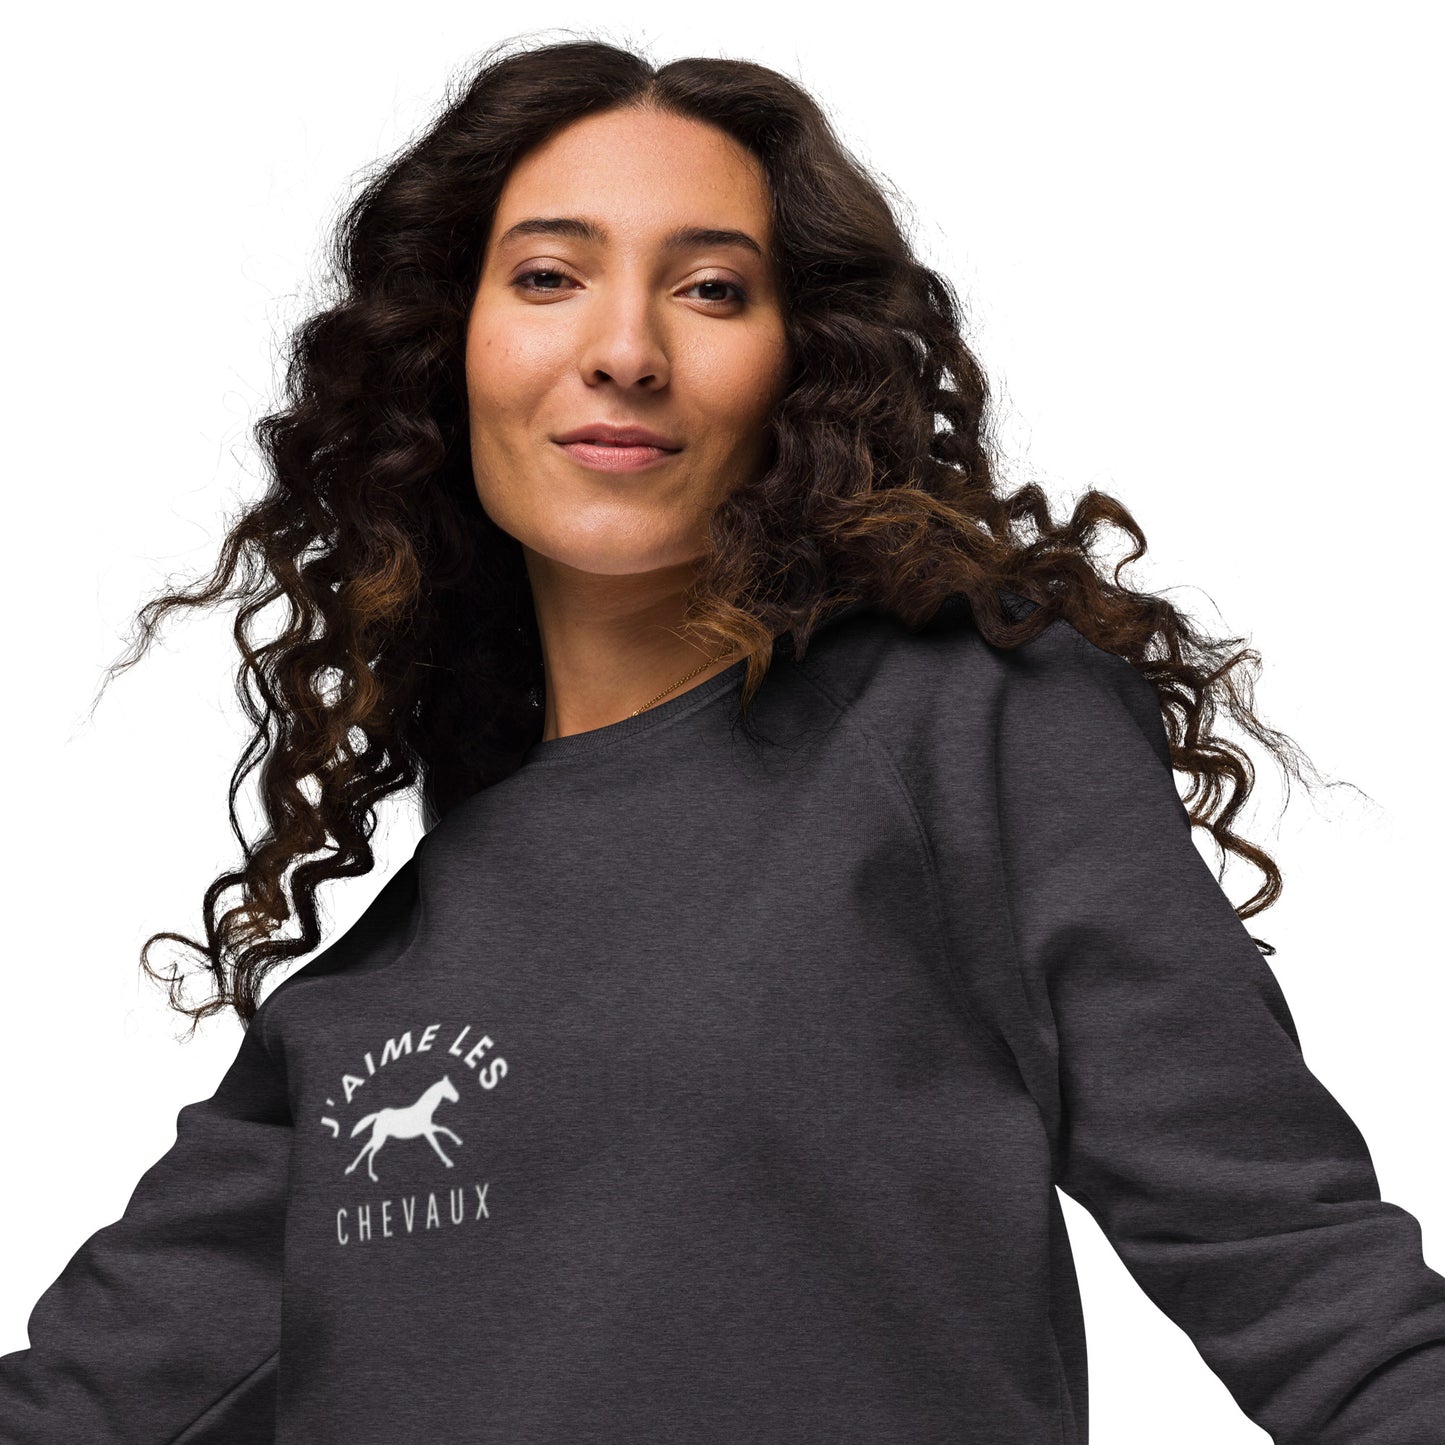 "I Love Horses" In French - Charcoal Grey Unisex Organic Crewneck Sweatshirt